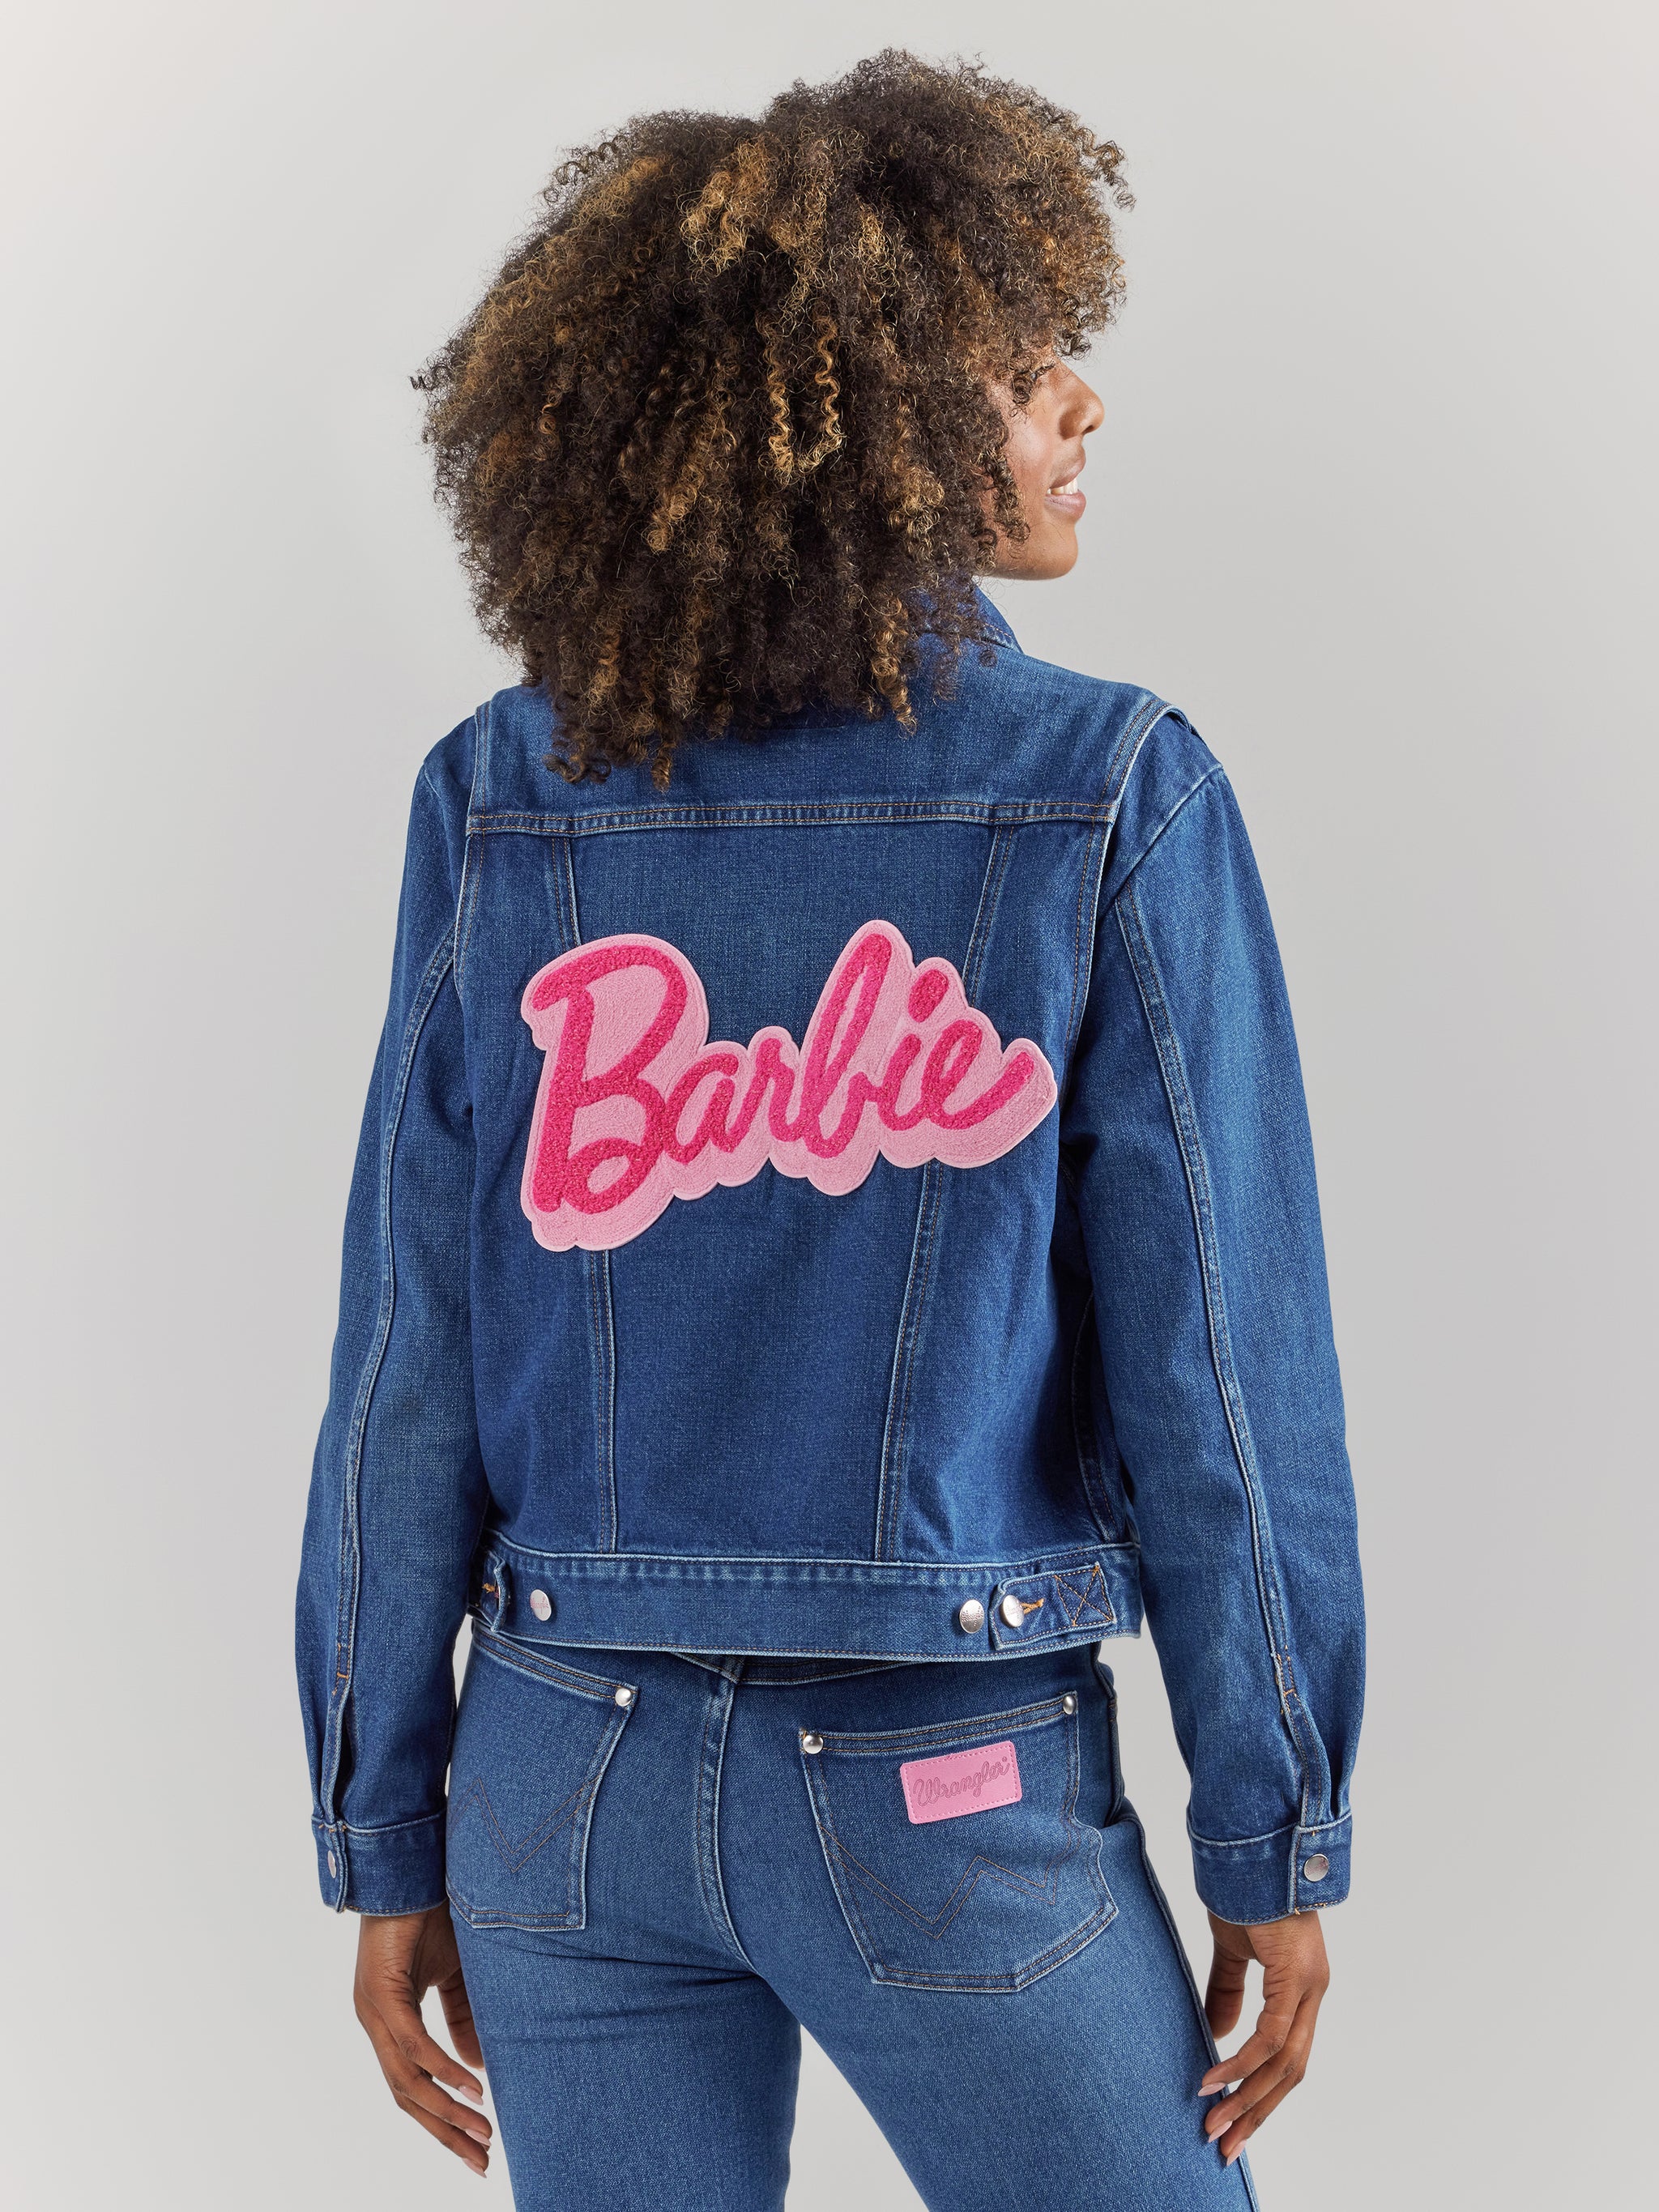 Barbie denim jacket